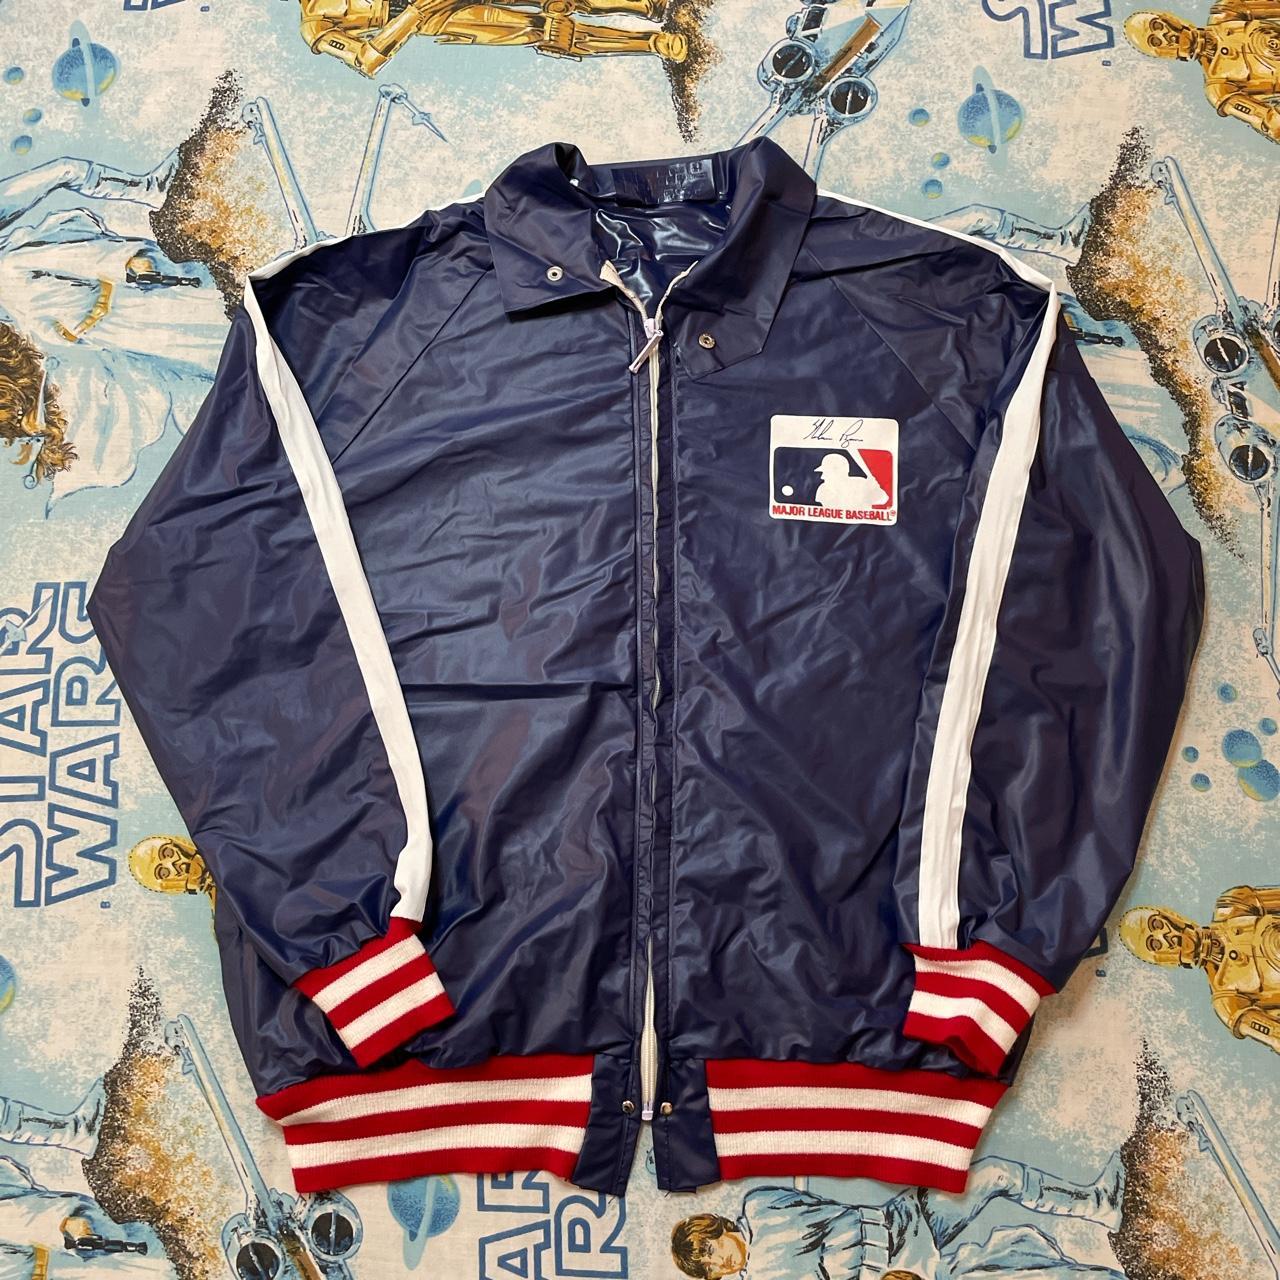 Vintage New York Yankees Jacket Vintage Major League Baseball 